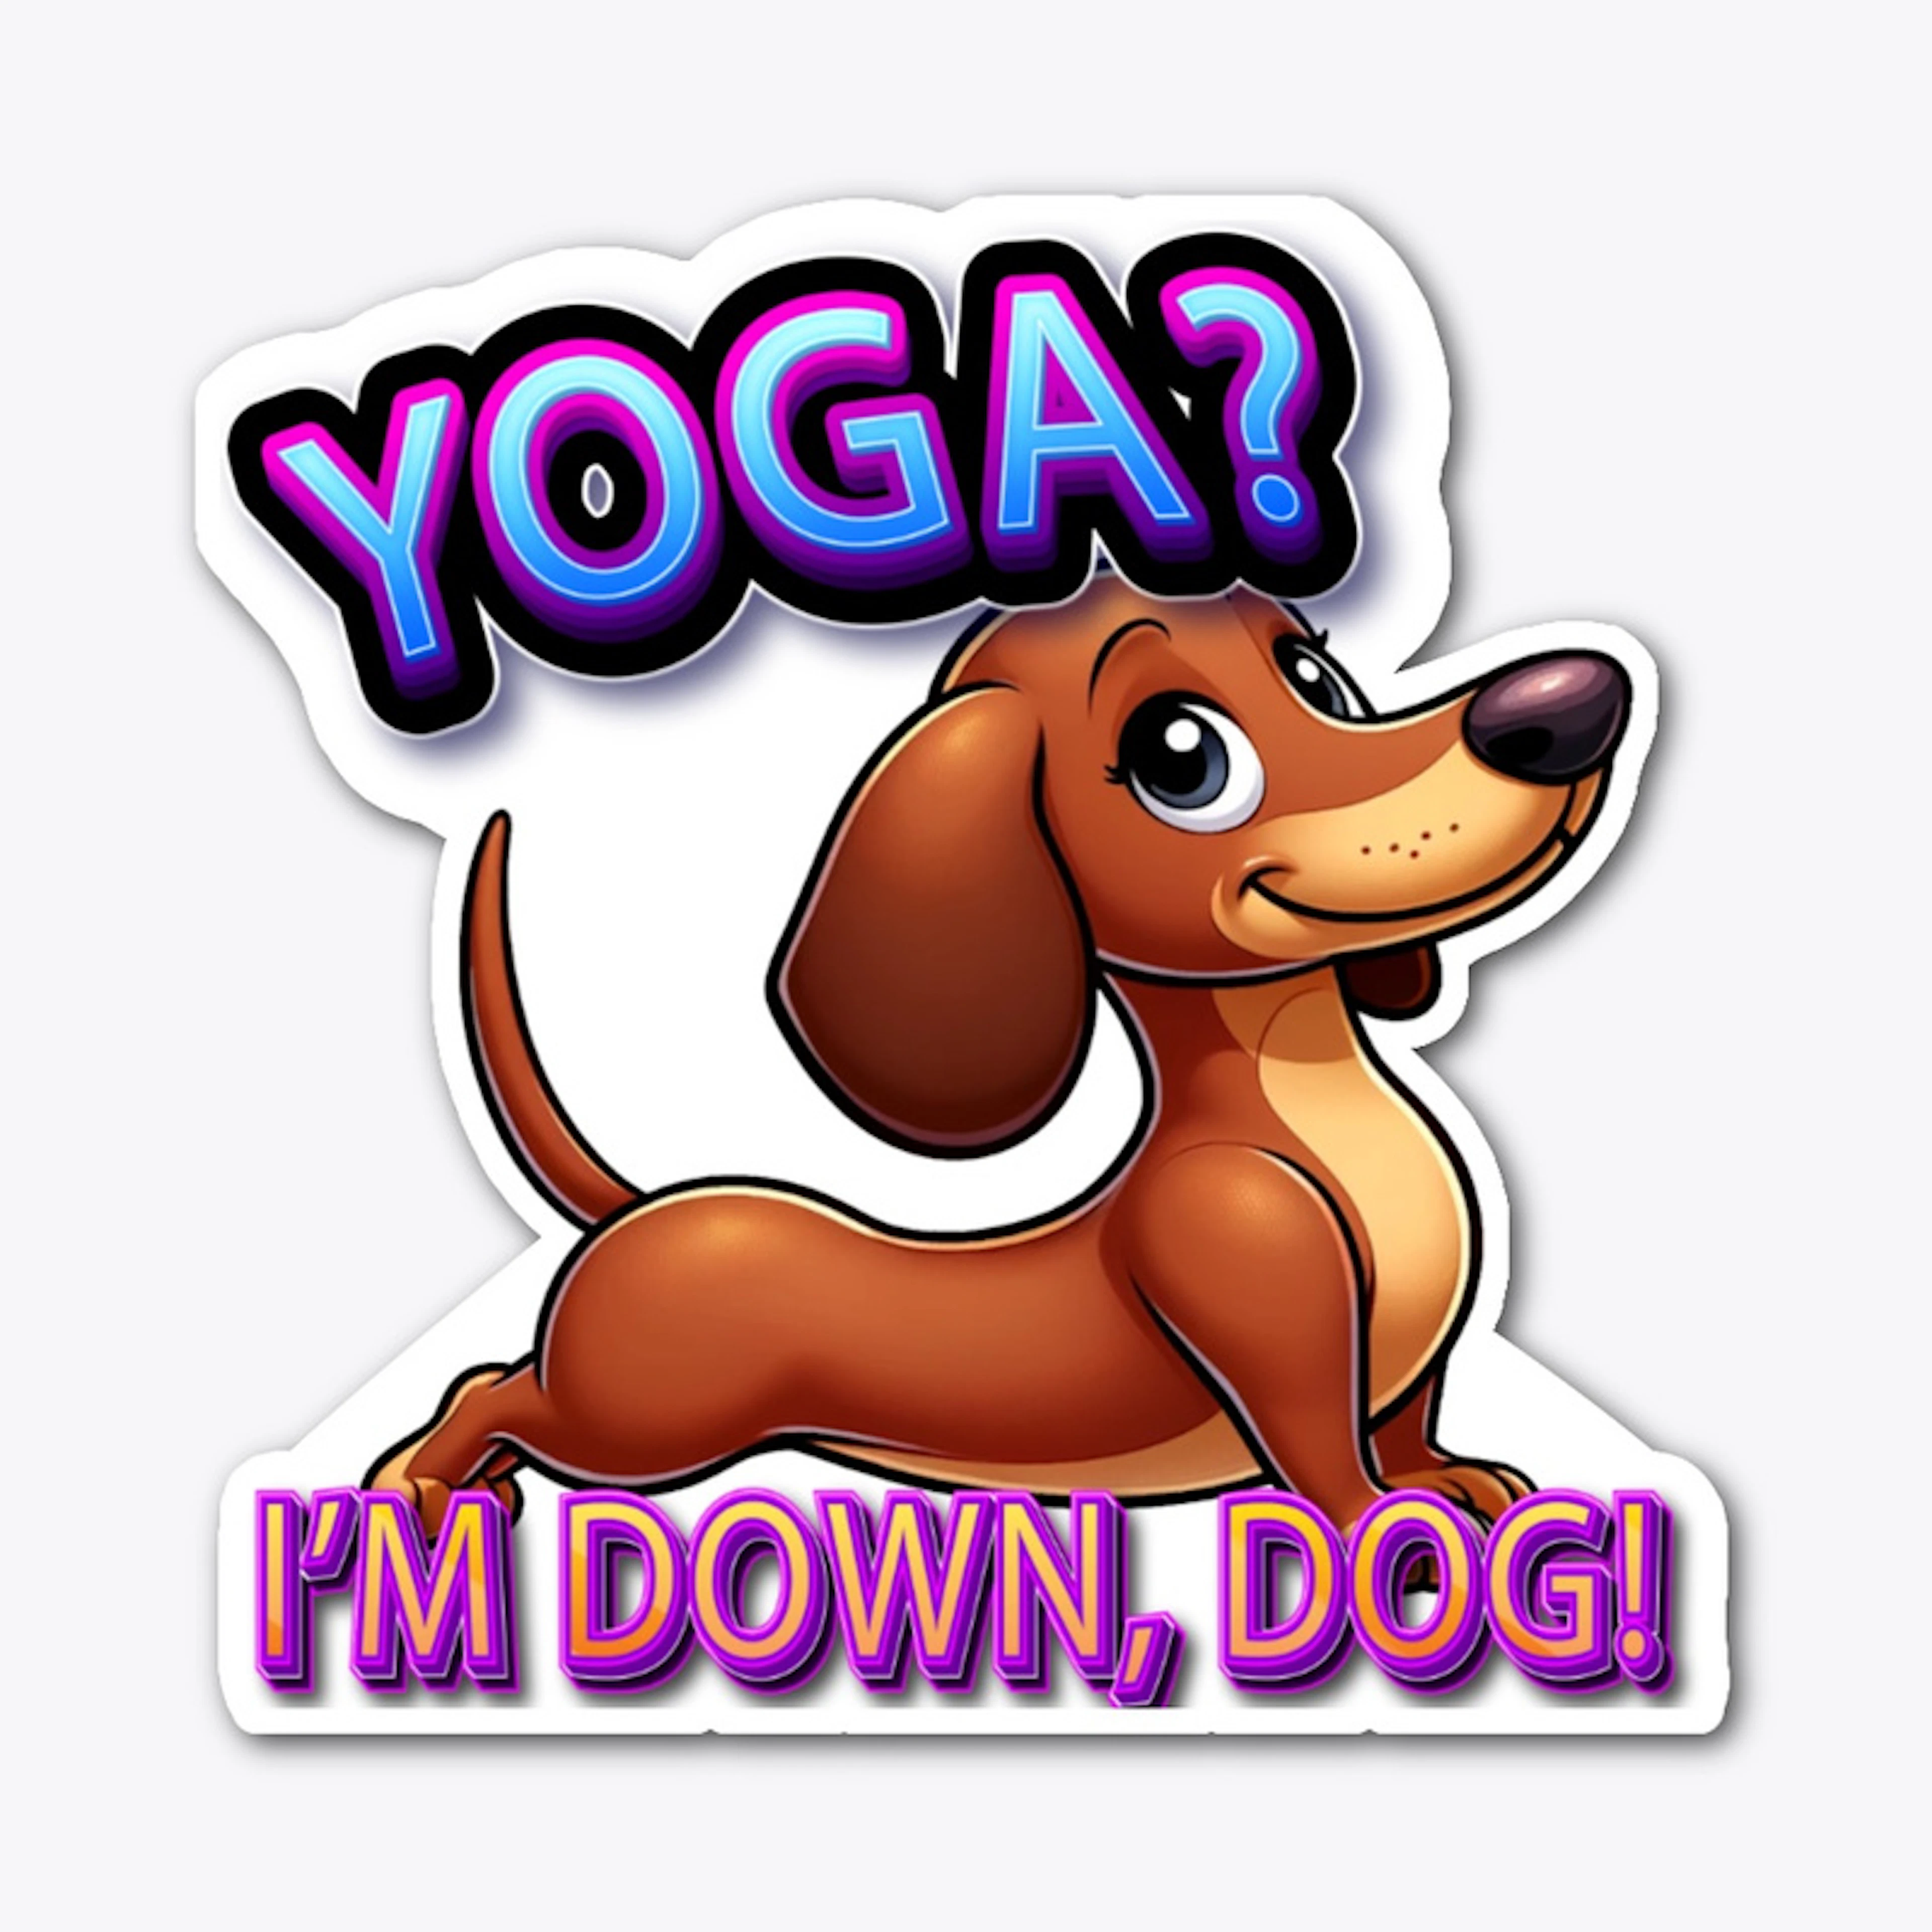 Dachshund Downward Dog Yoga Tee